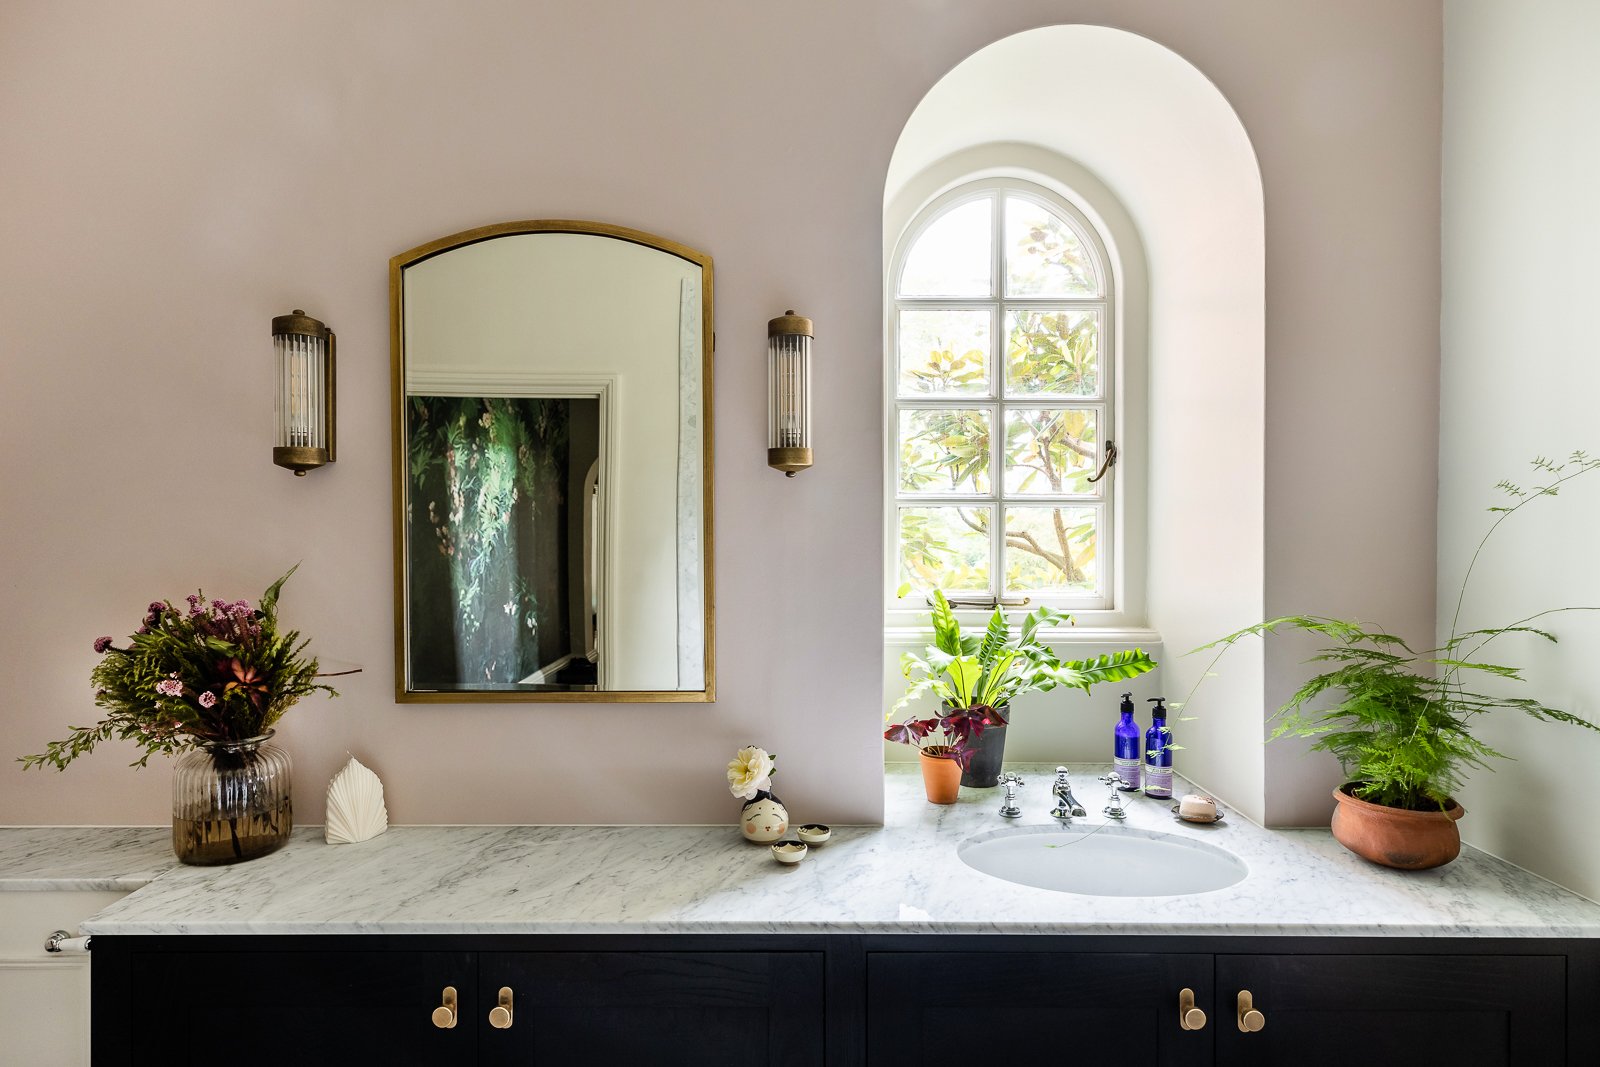 CharlotteBucciero-interiors-georgian-arch-window-bathroom-mirror-vanity-marble.jpg